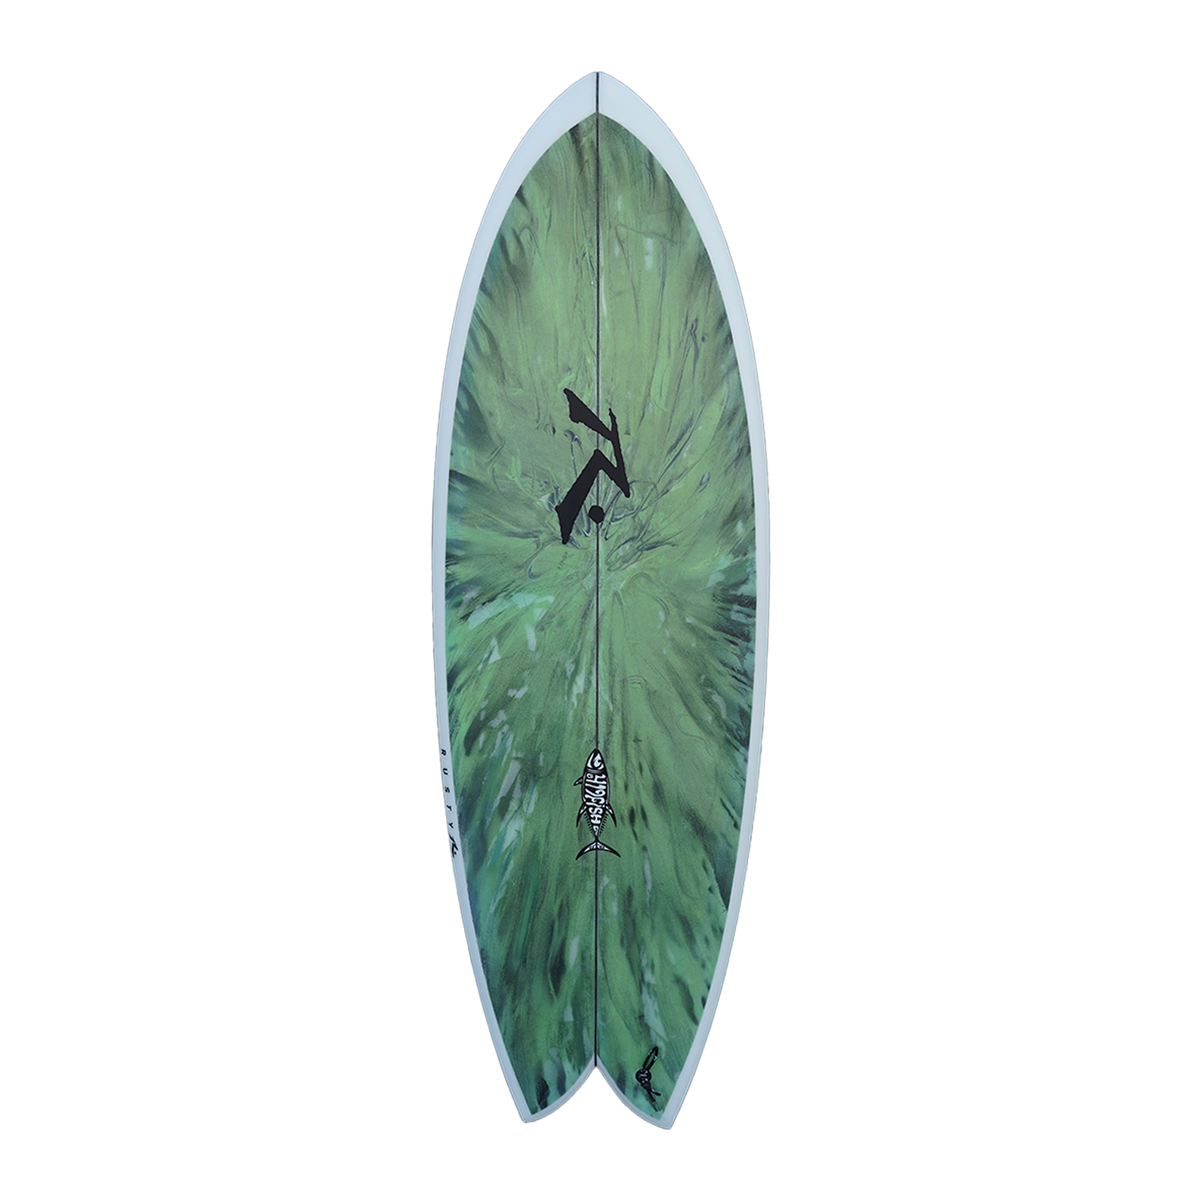 419fish - Alternative - Rusty Surfboards - Top View - Green Grey Swirl